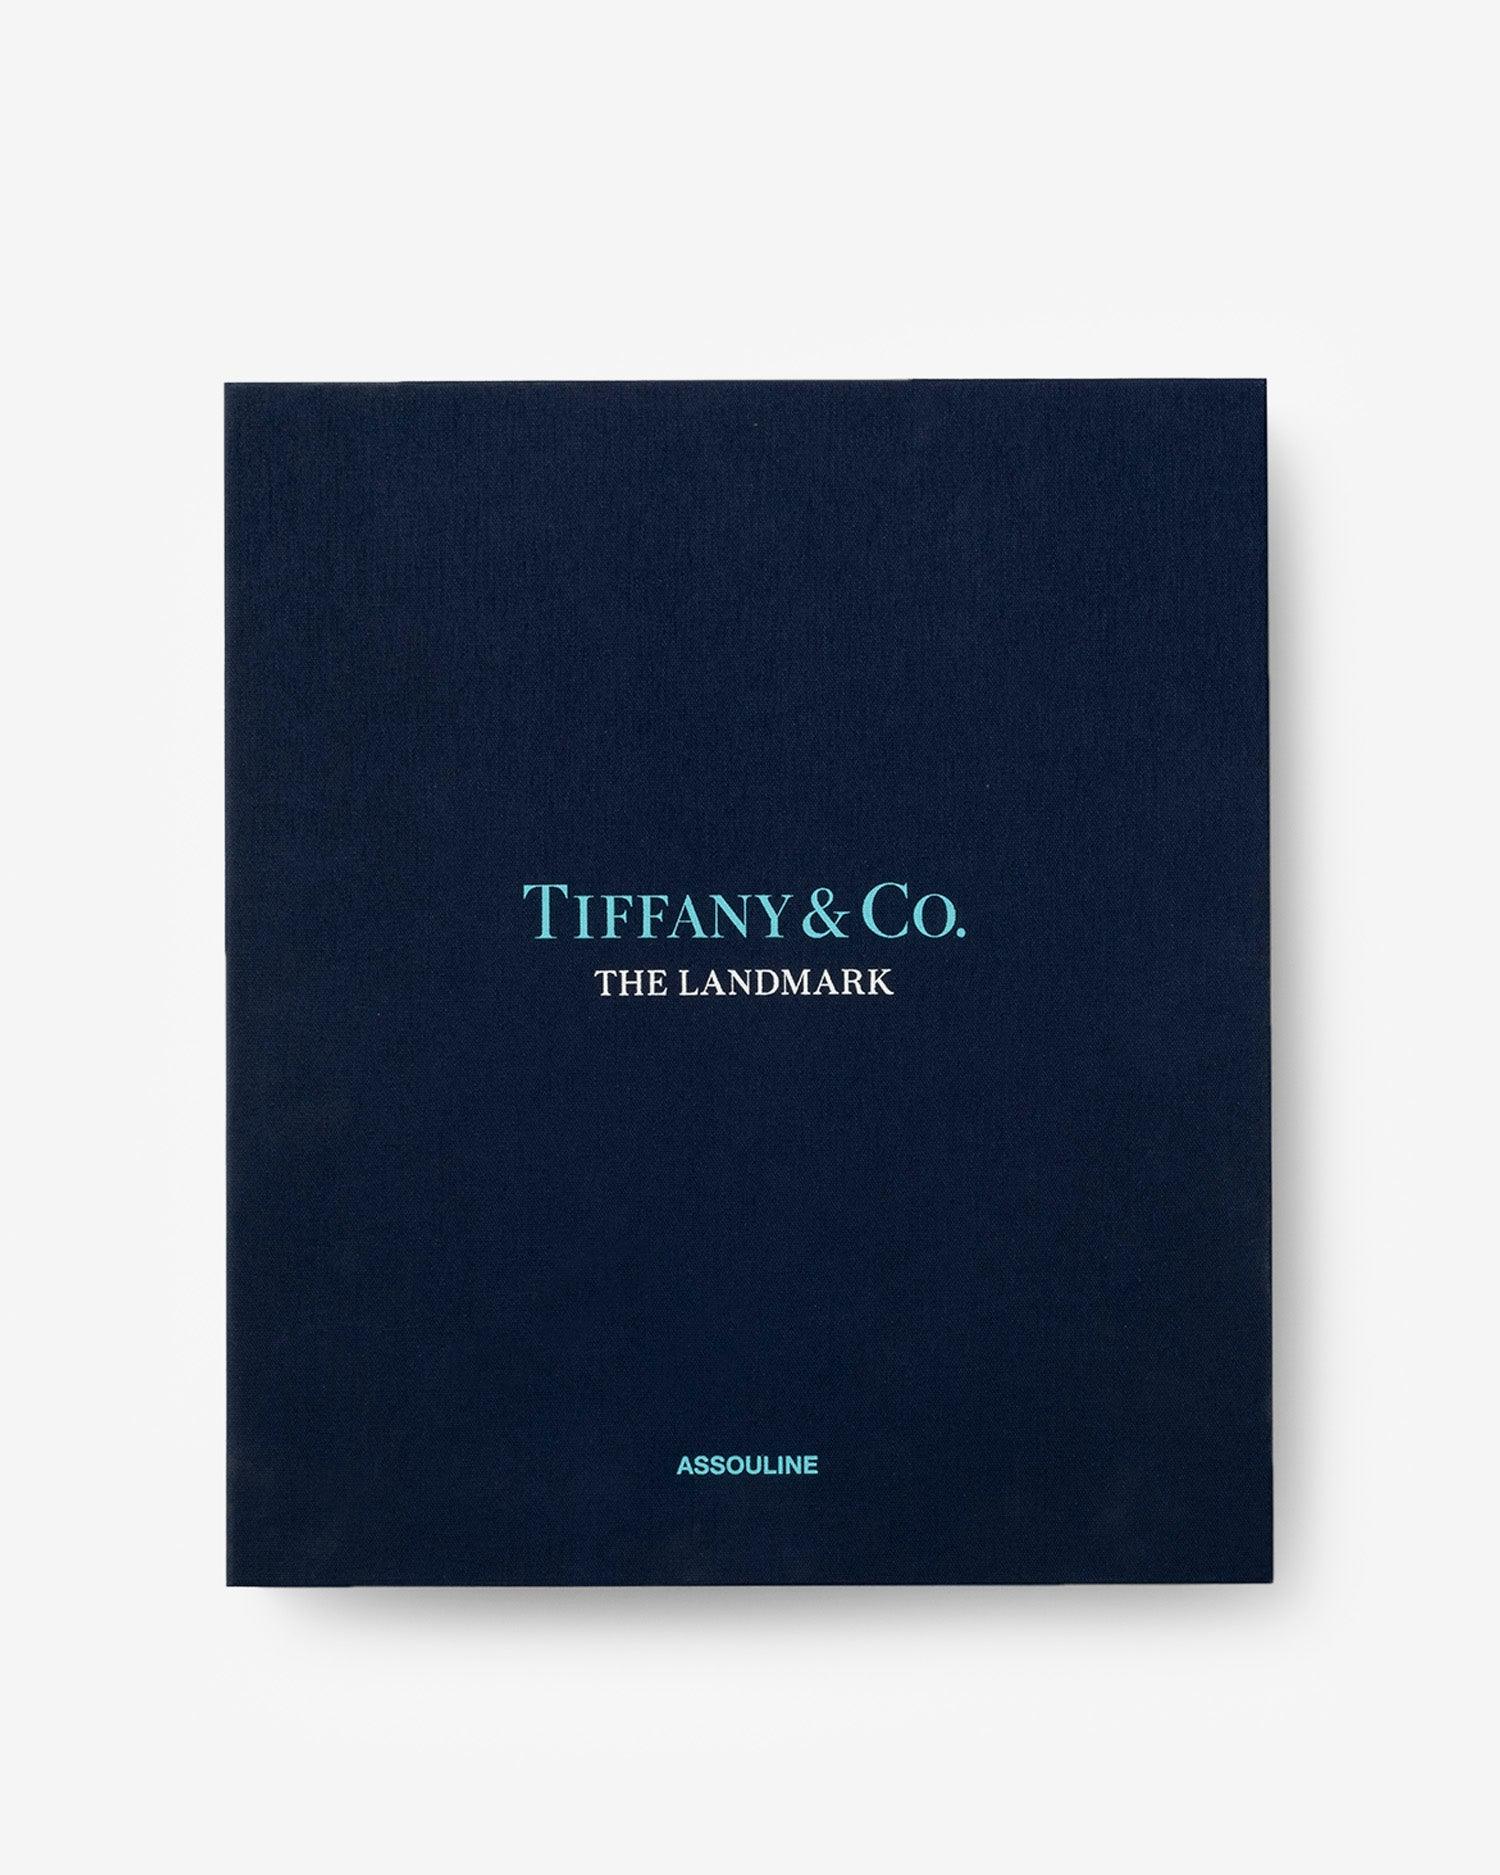 Tiffany & Co. Landmark Coffee Table Book | ASSOULINE